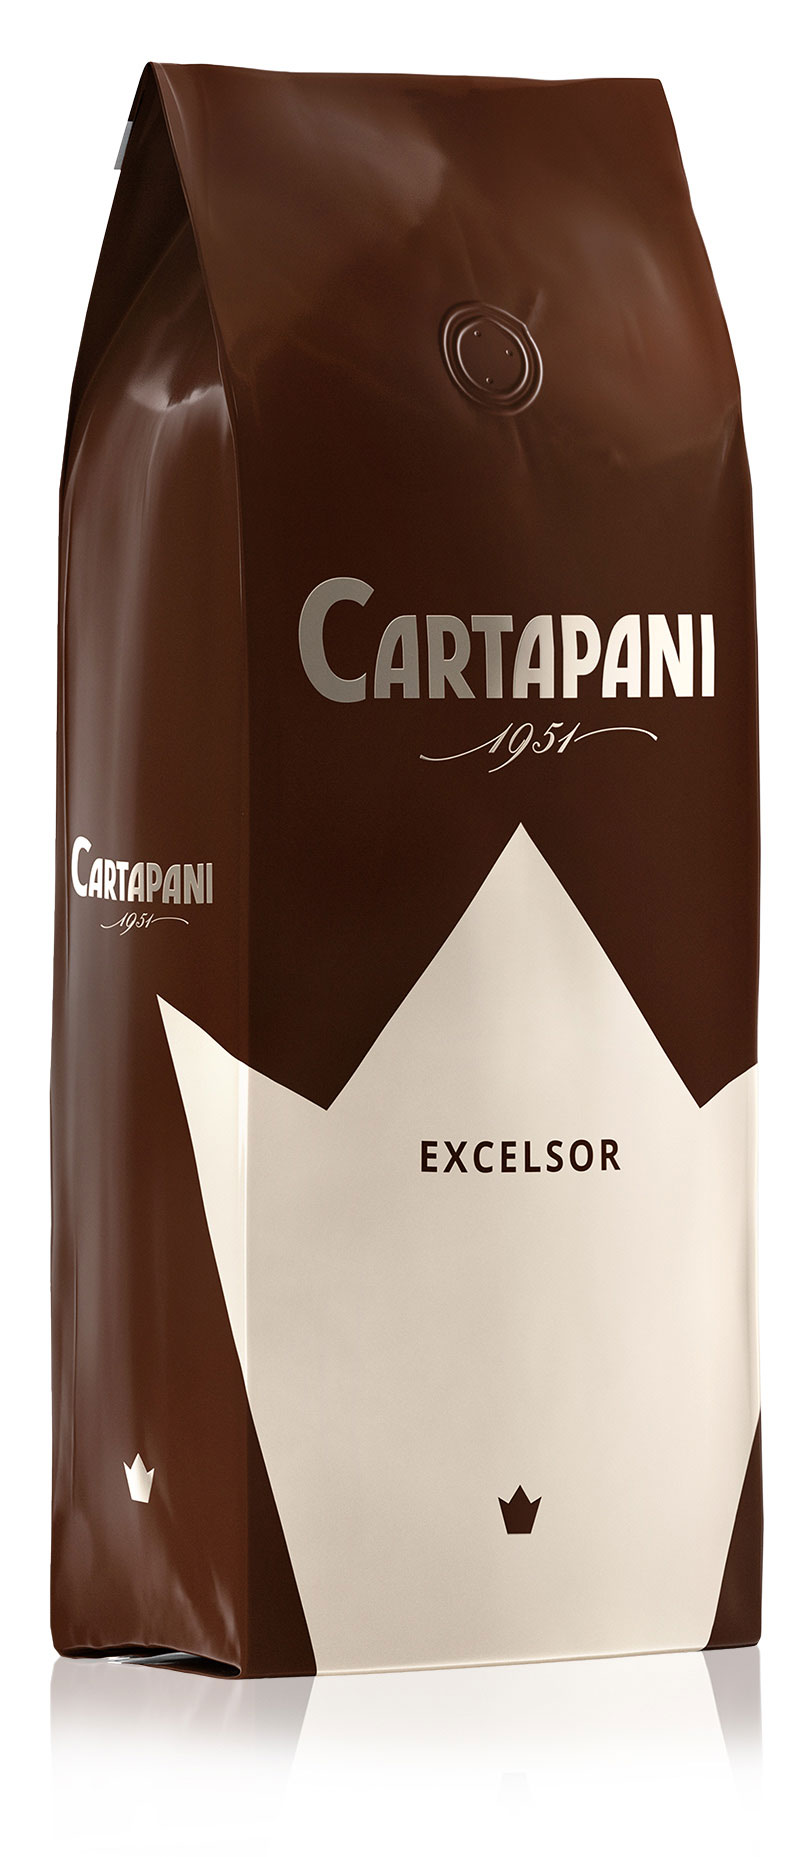 EXCELSOR - Cartapani